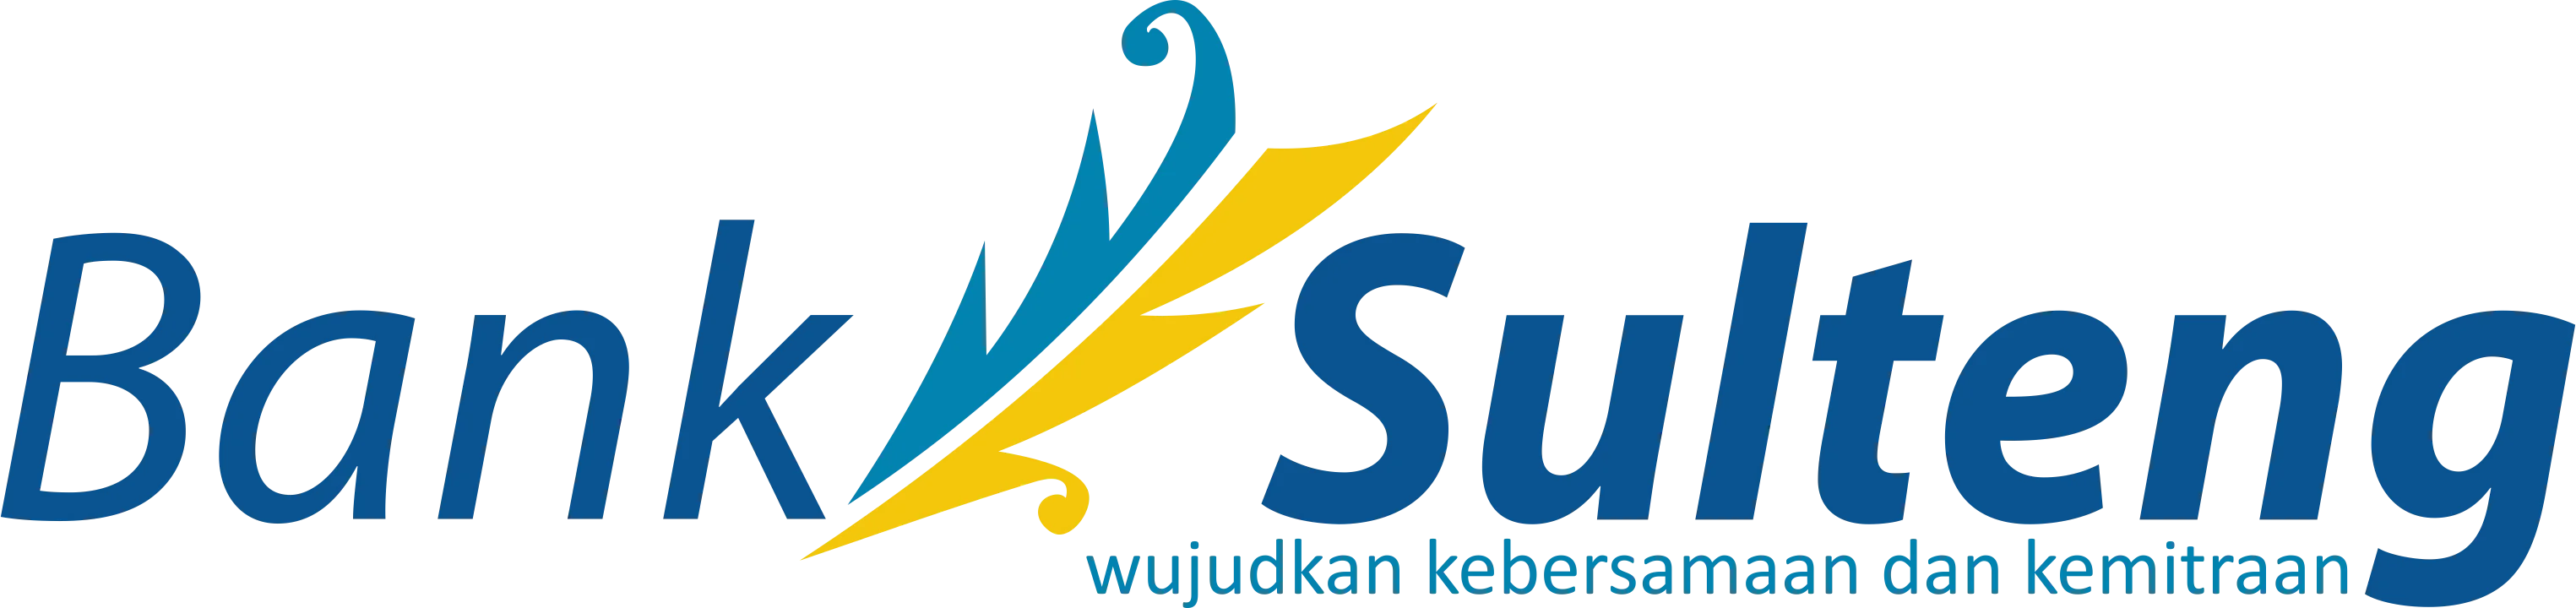 Bank-Sulteng-Logo-PNG-720p-FileVector69